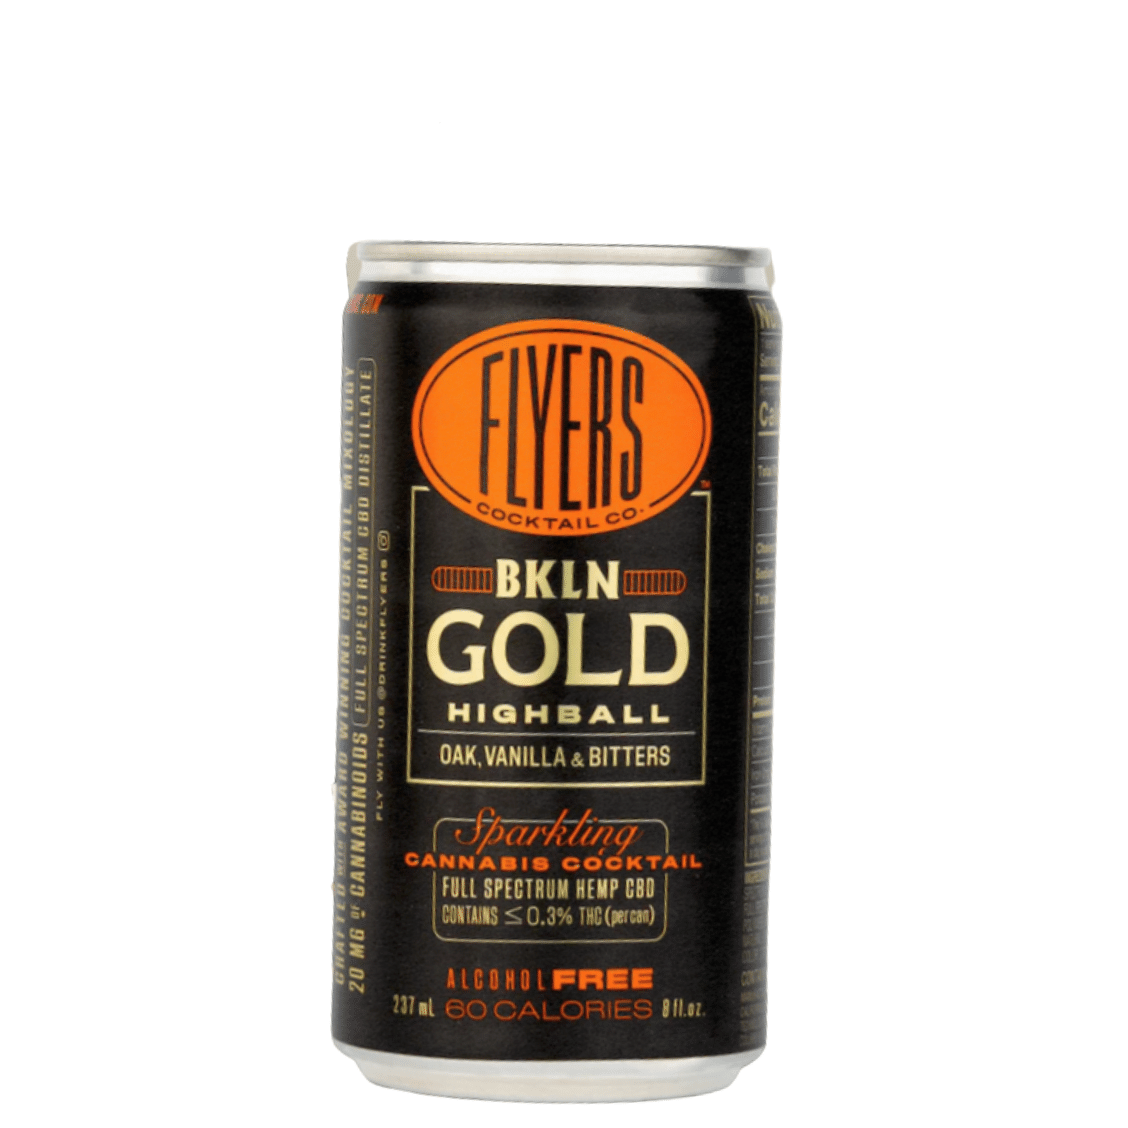 Flyers BLKN Gold - Sparkling CBD Cocktail (4 pack)